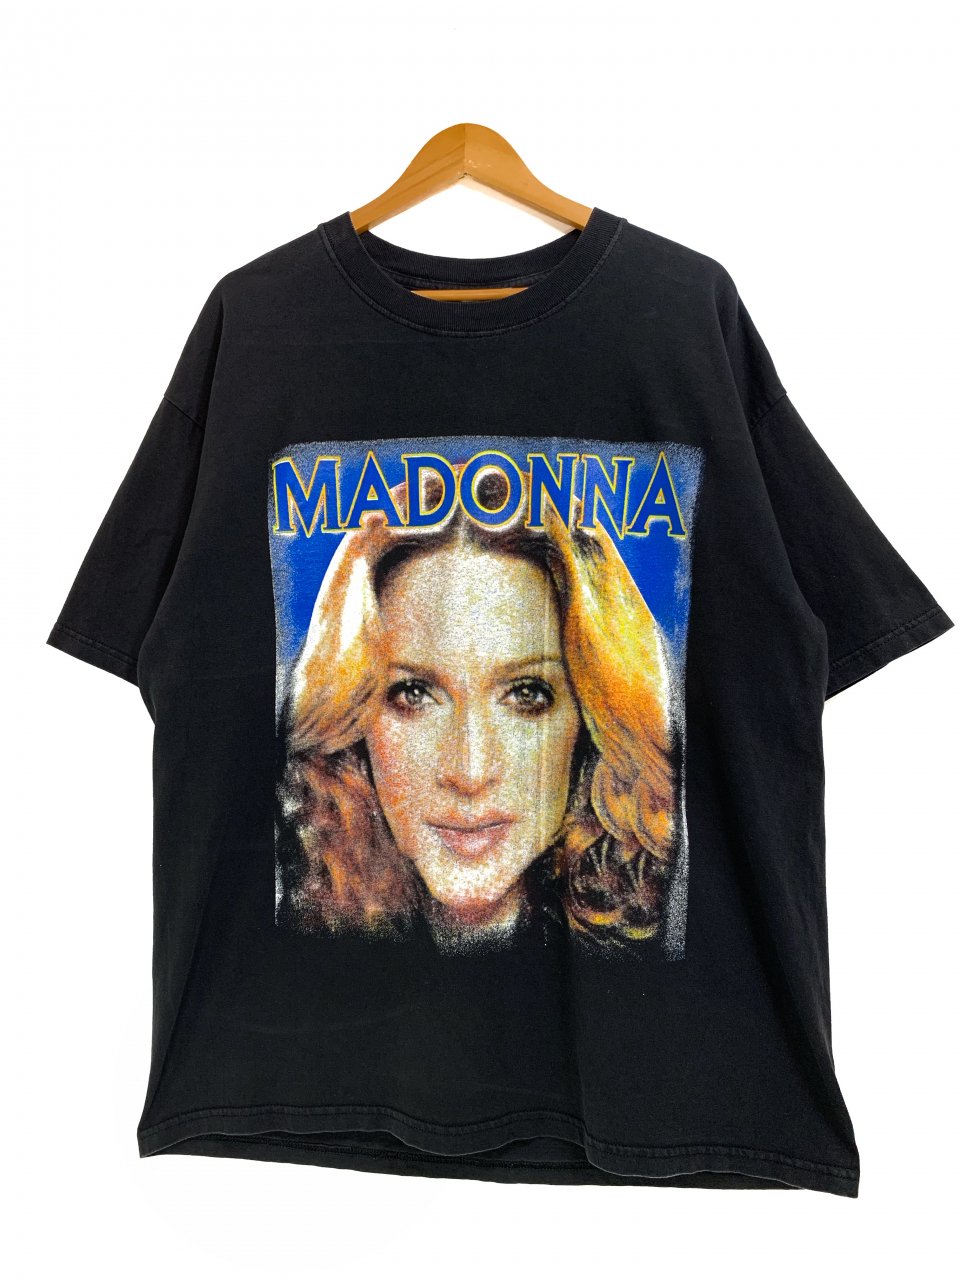 S 黒 Madonna Tee マドンナ Tシャツ